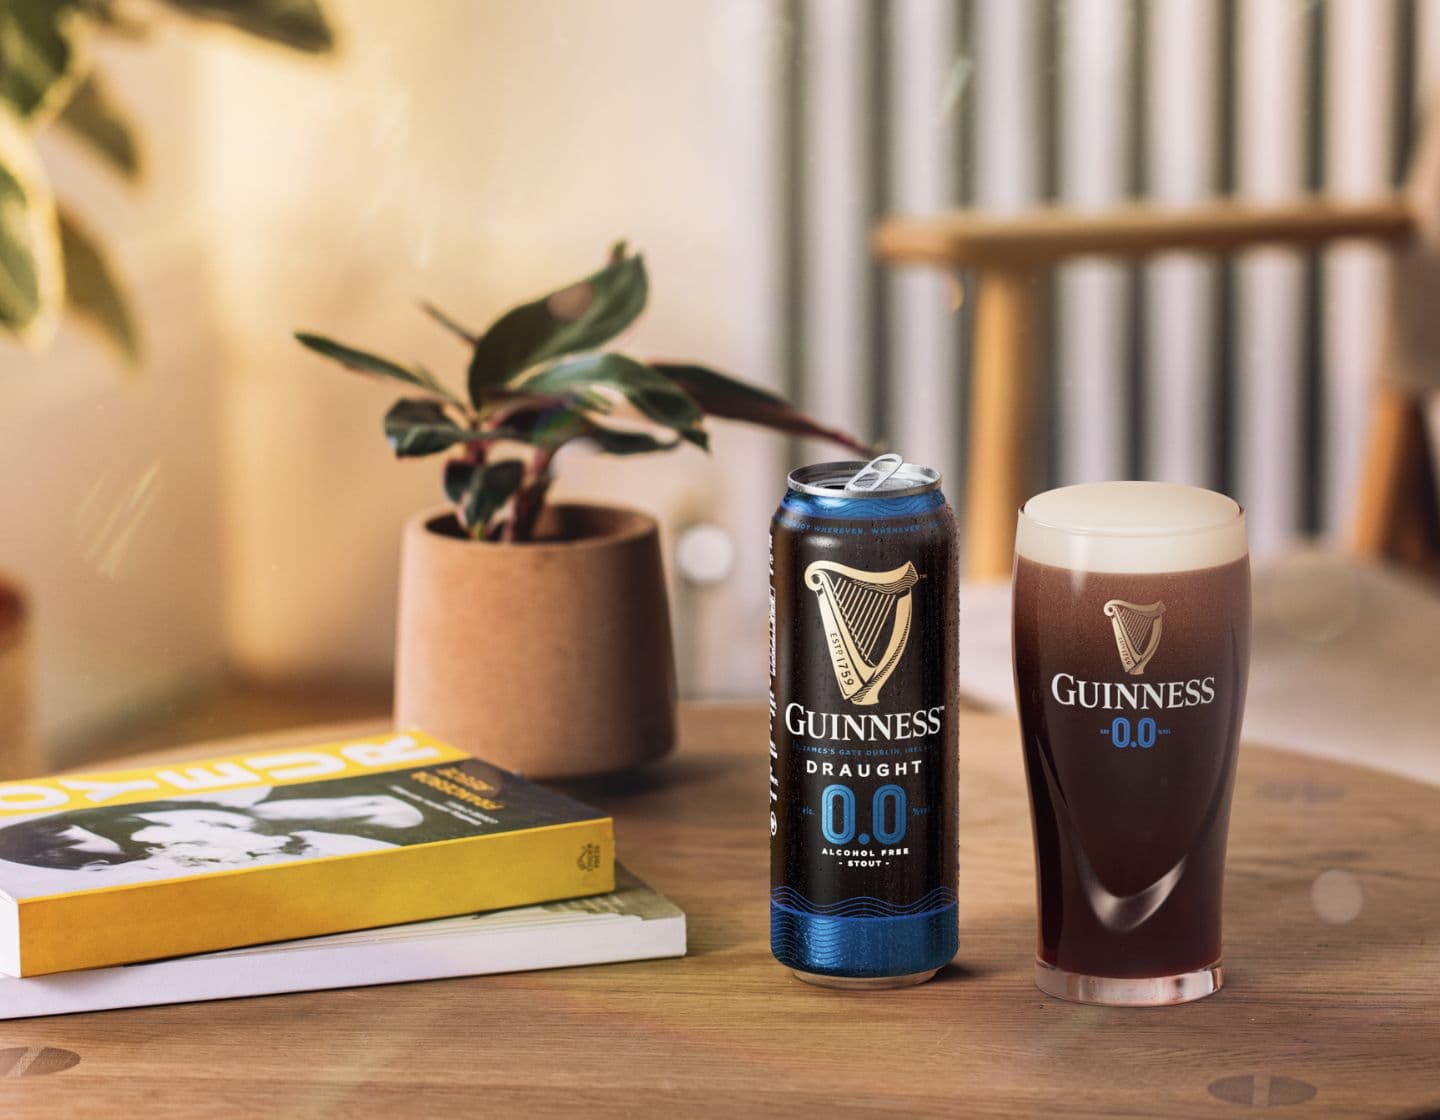 Lata de Guinness 0,0 sobre una barra junto a un vaso de pinta con Guinness 0,0 